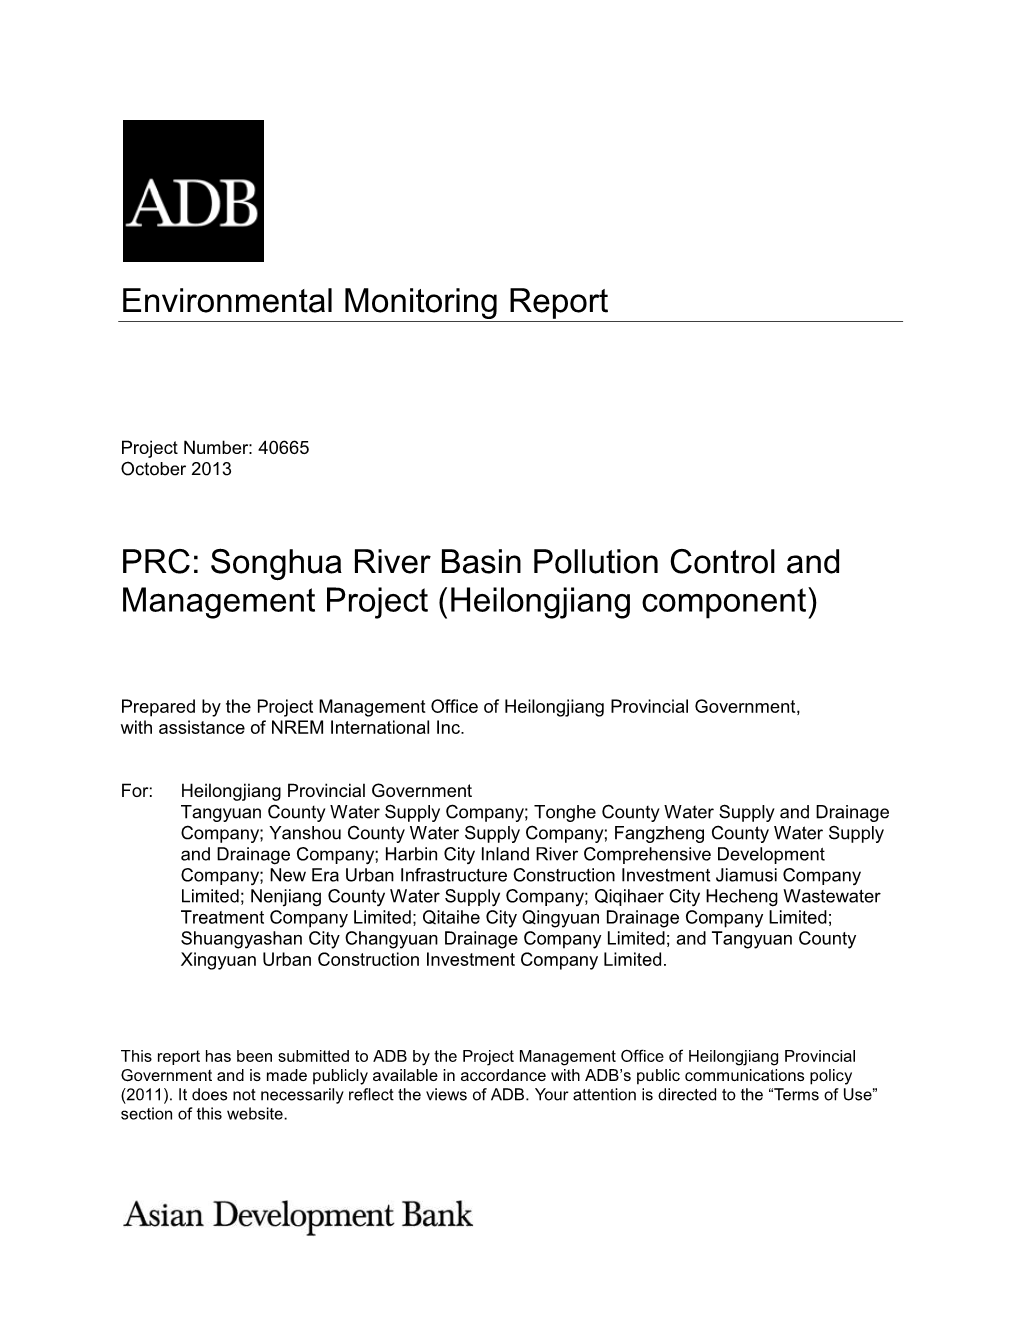 Environmental Monitoring Report PRC: Songhua River Basin Pollution